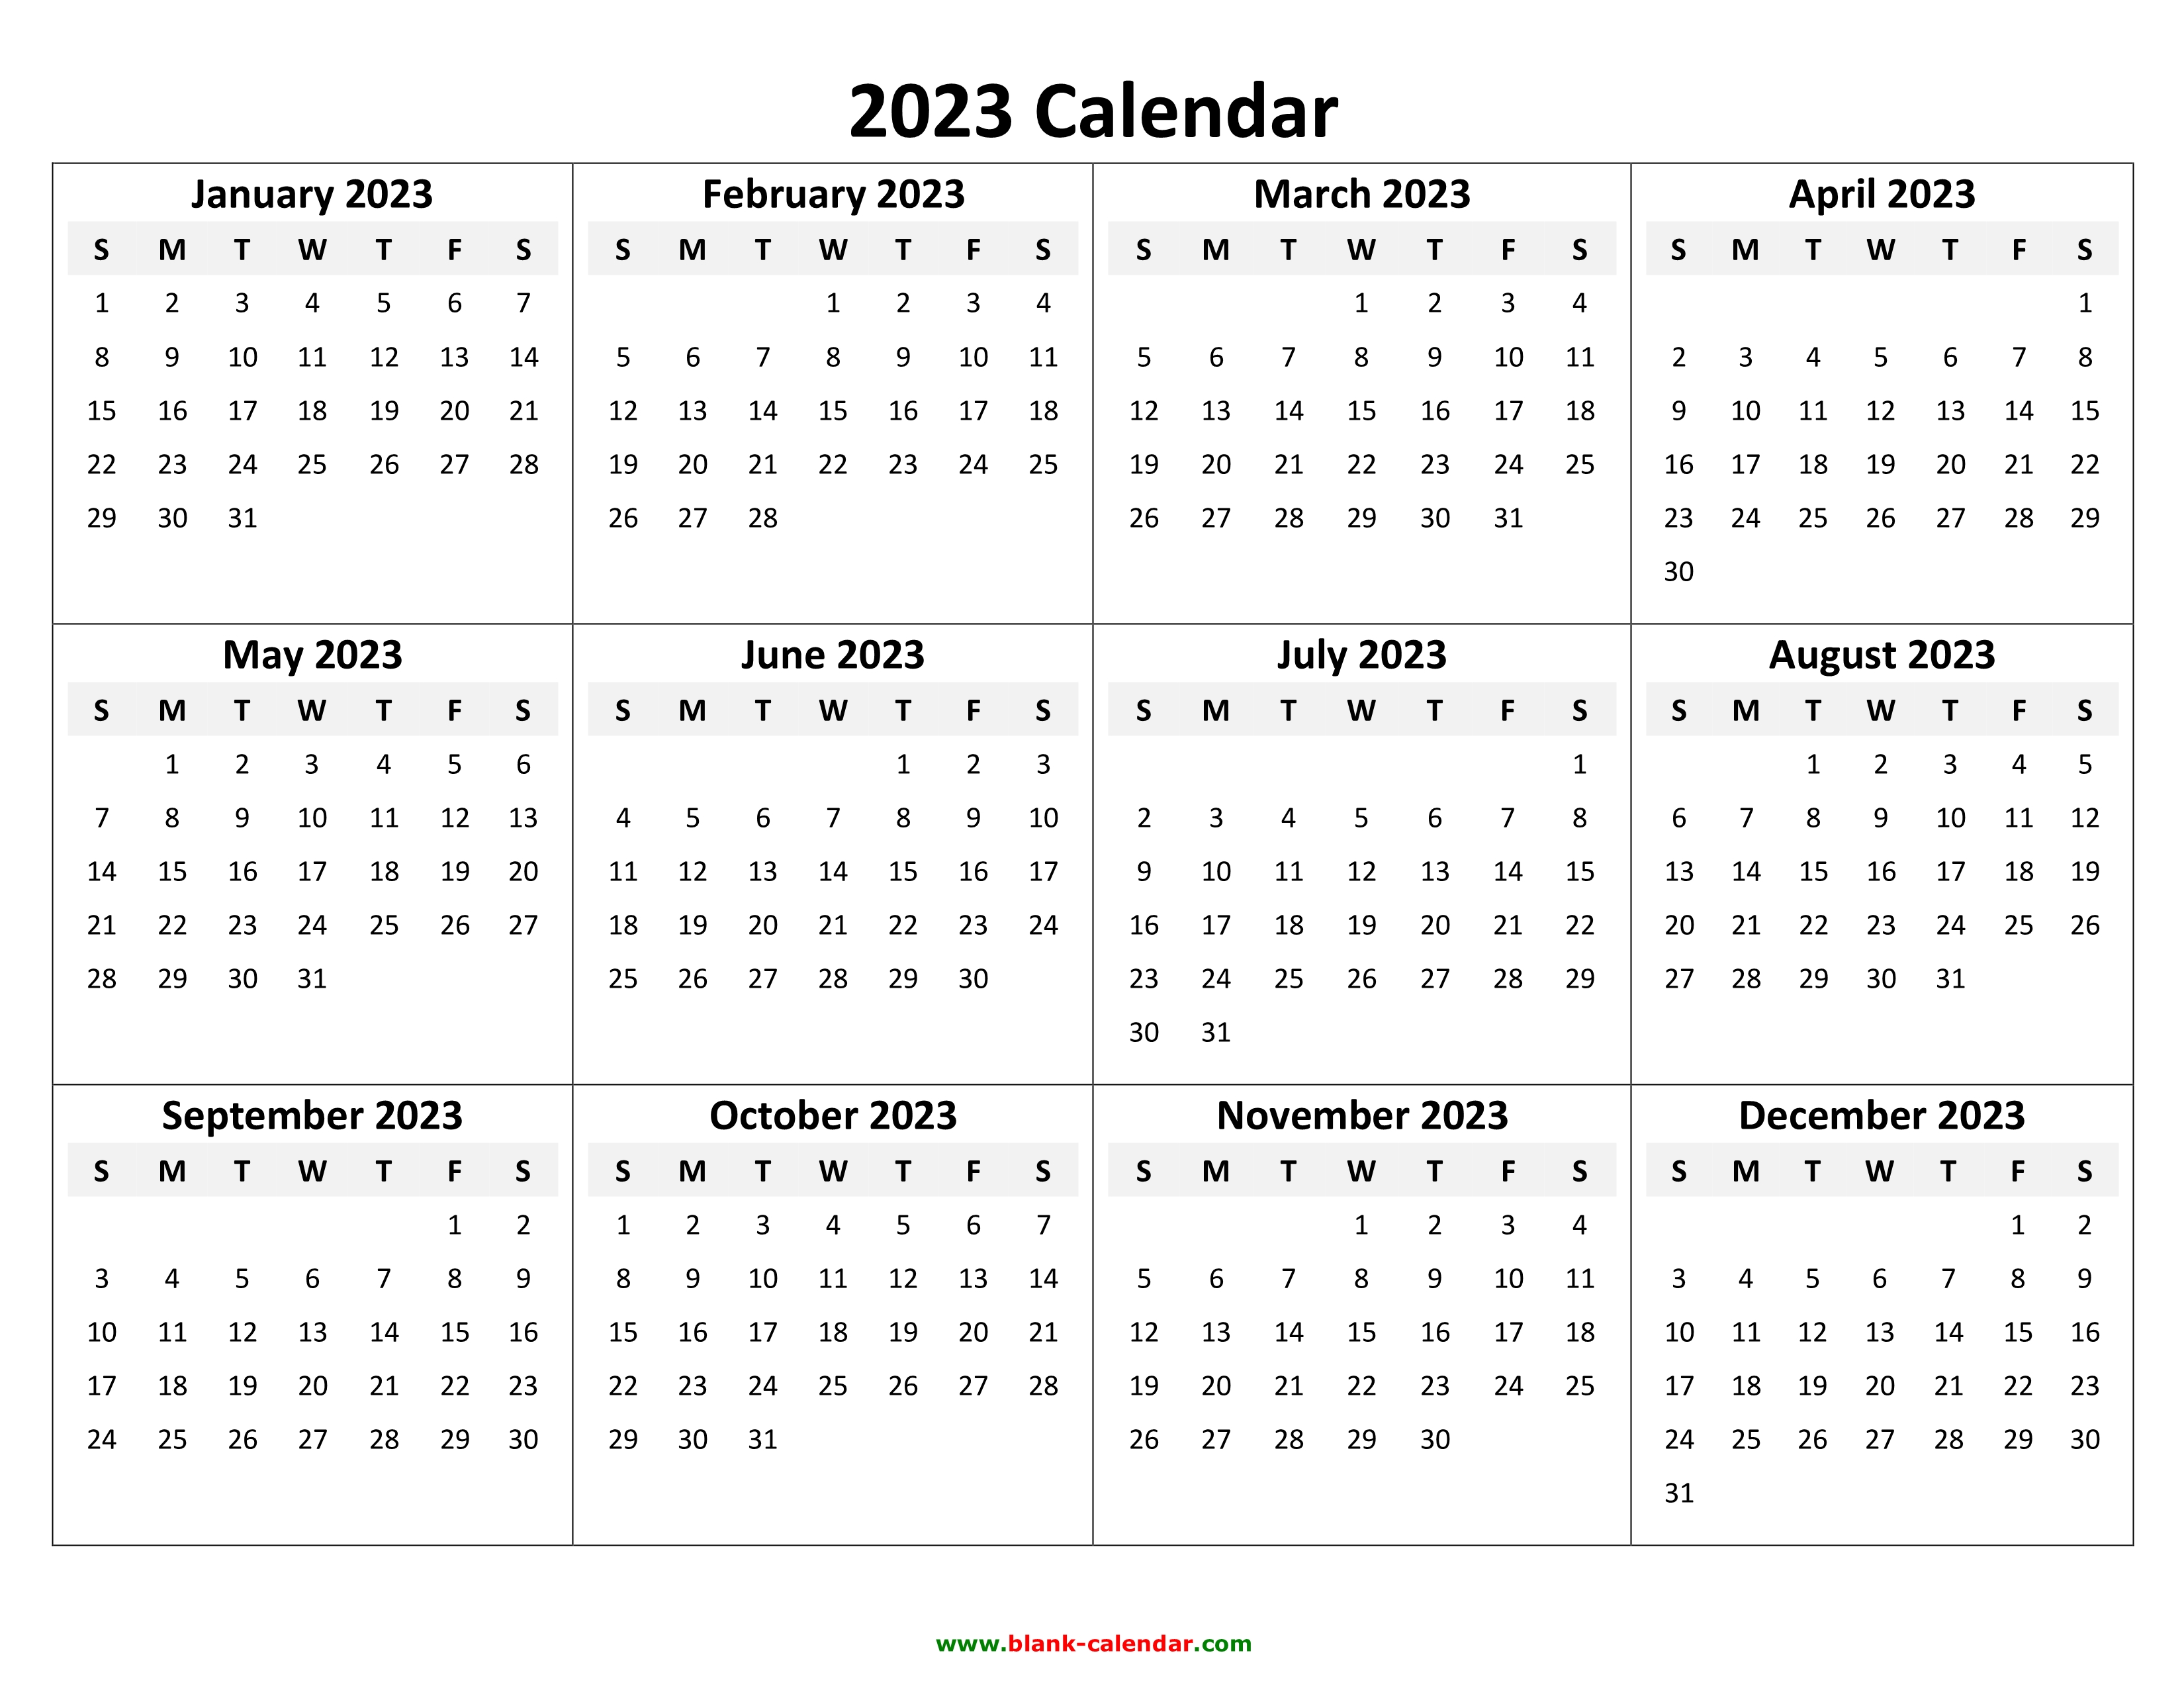 Downloadable 2023 Yearly Calendar Printable Calendar 2023